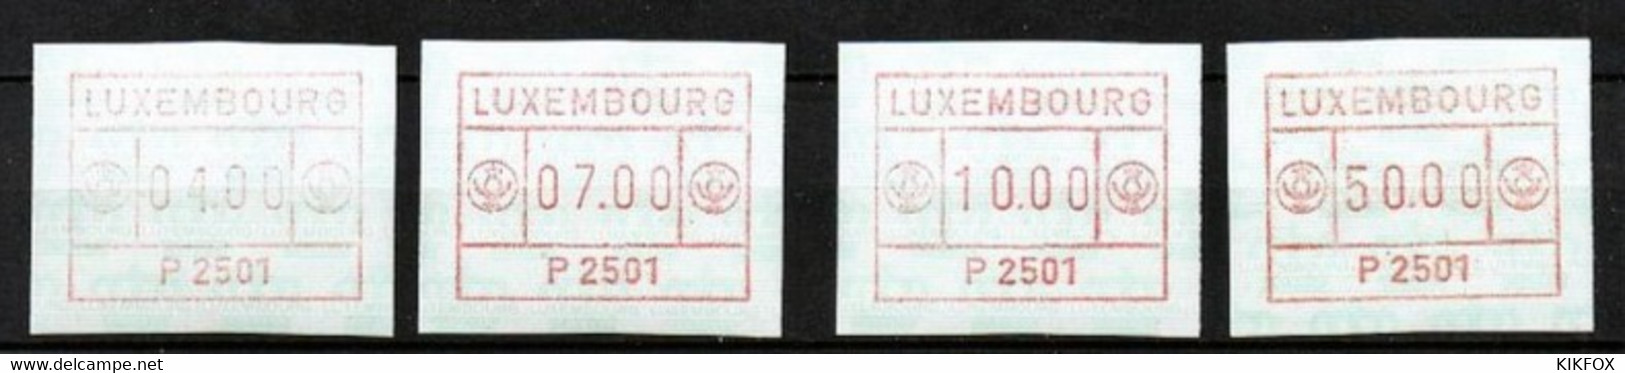 Luxembourg, Luxemburg , 1983, MI 1 ,AUTOMATENMARKEN, DISTRIBUTEUR , 4 WERTE - Automatenmarken